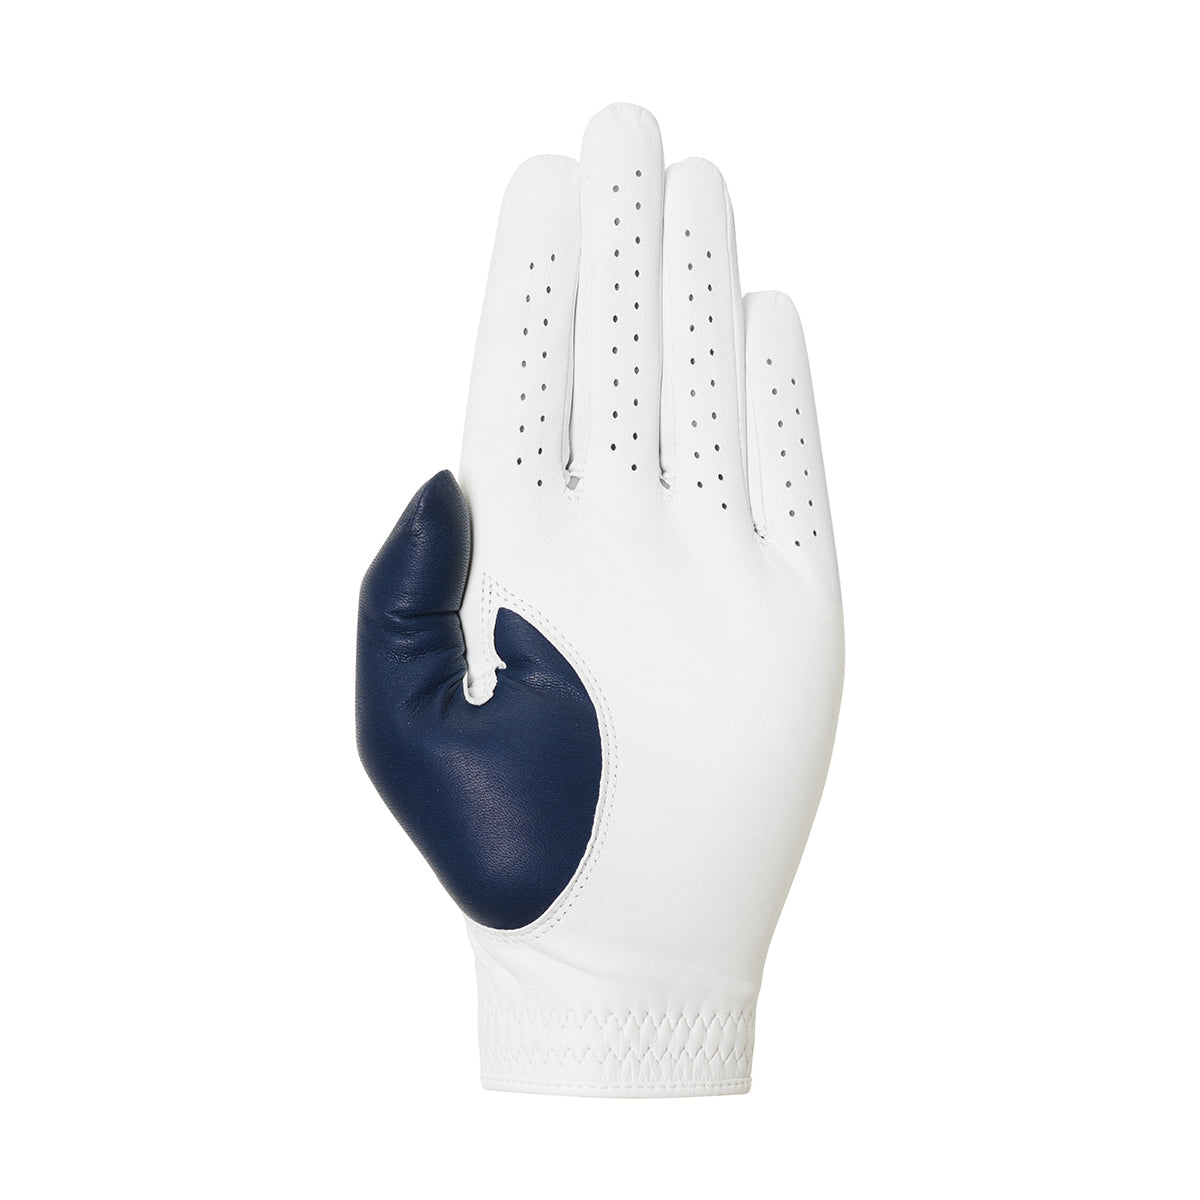 Men's Golf Glove Left Elite Pro Sentosa White/Navy